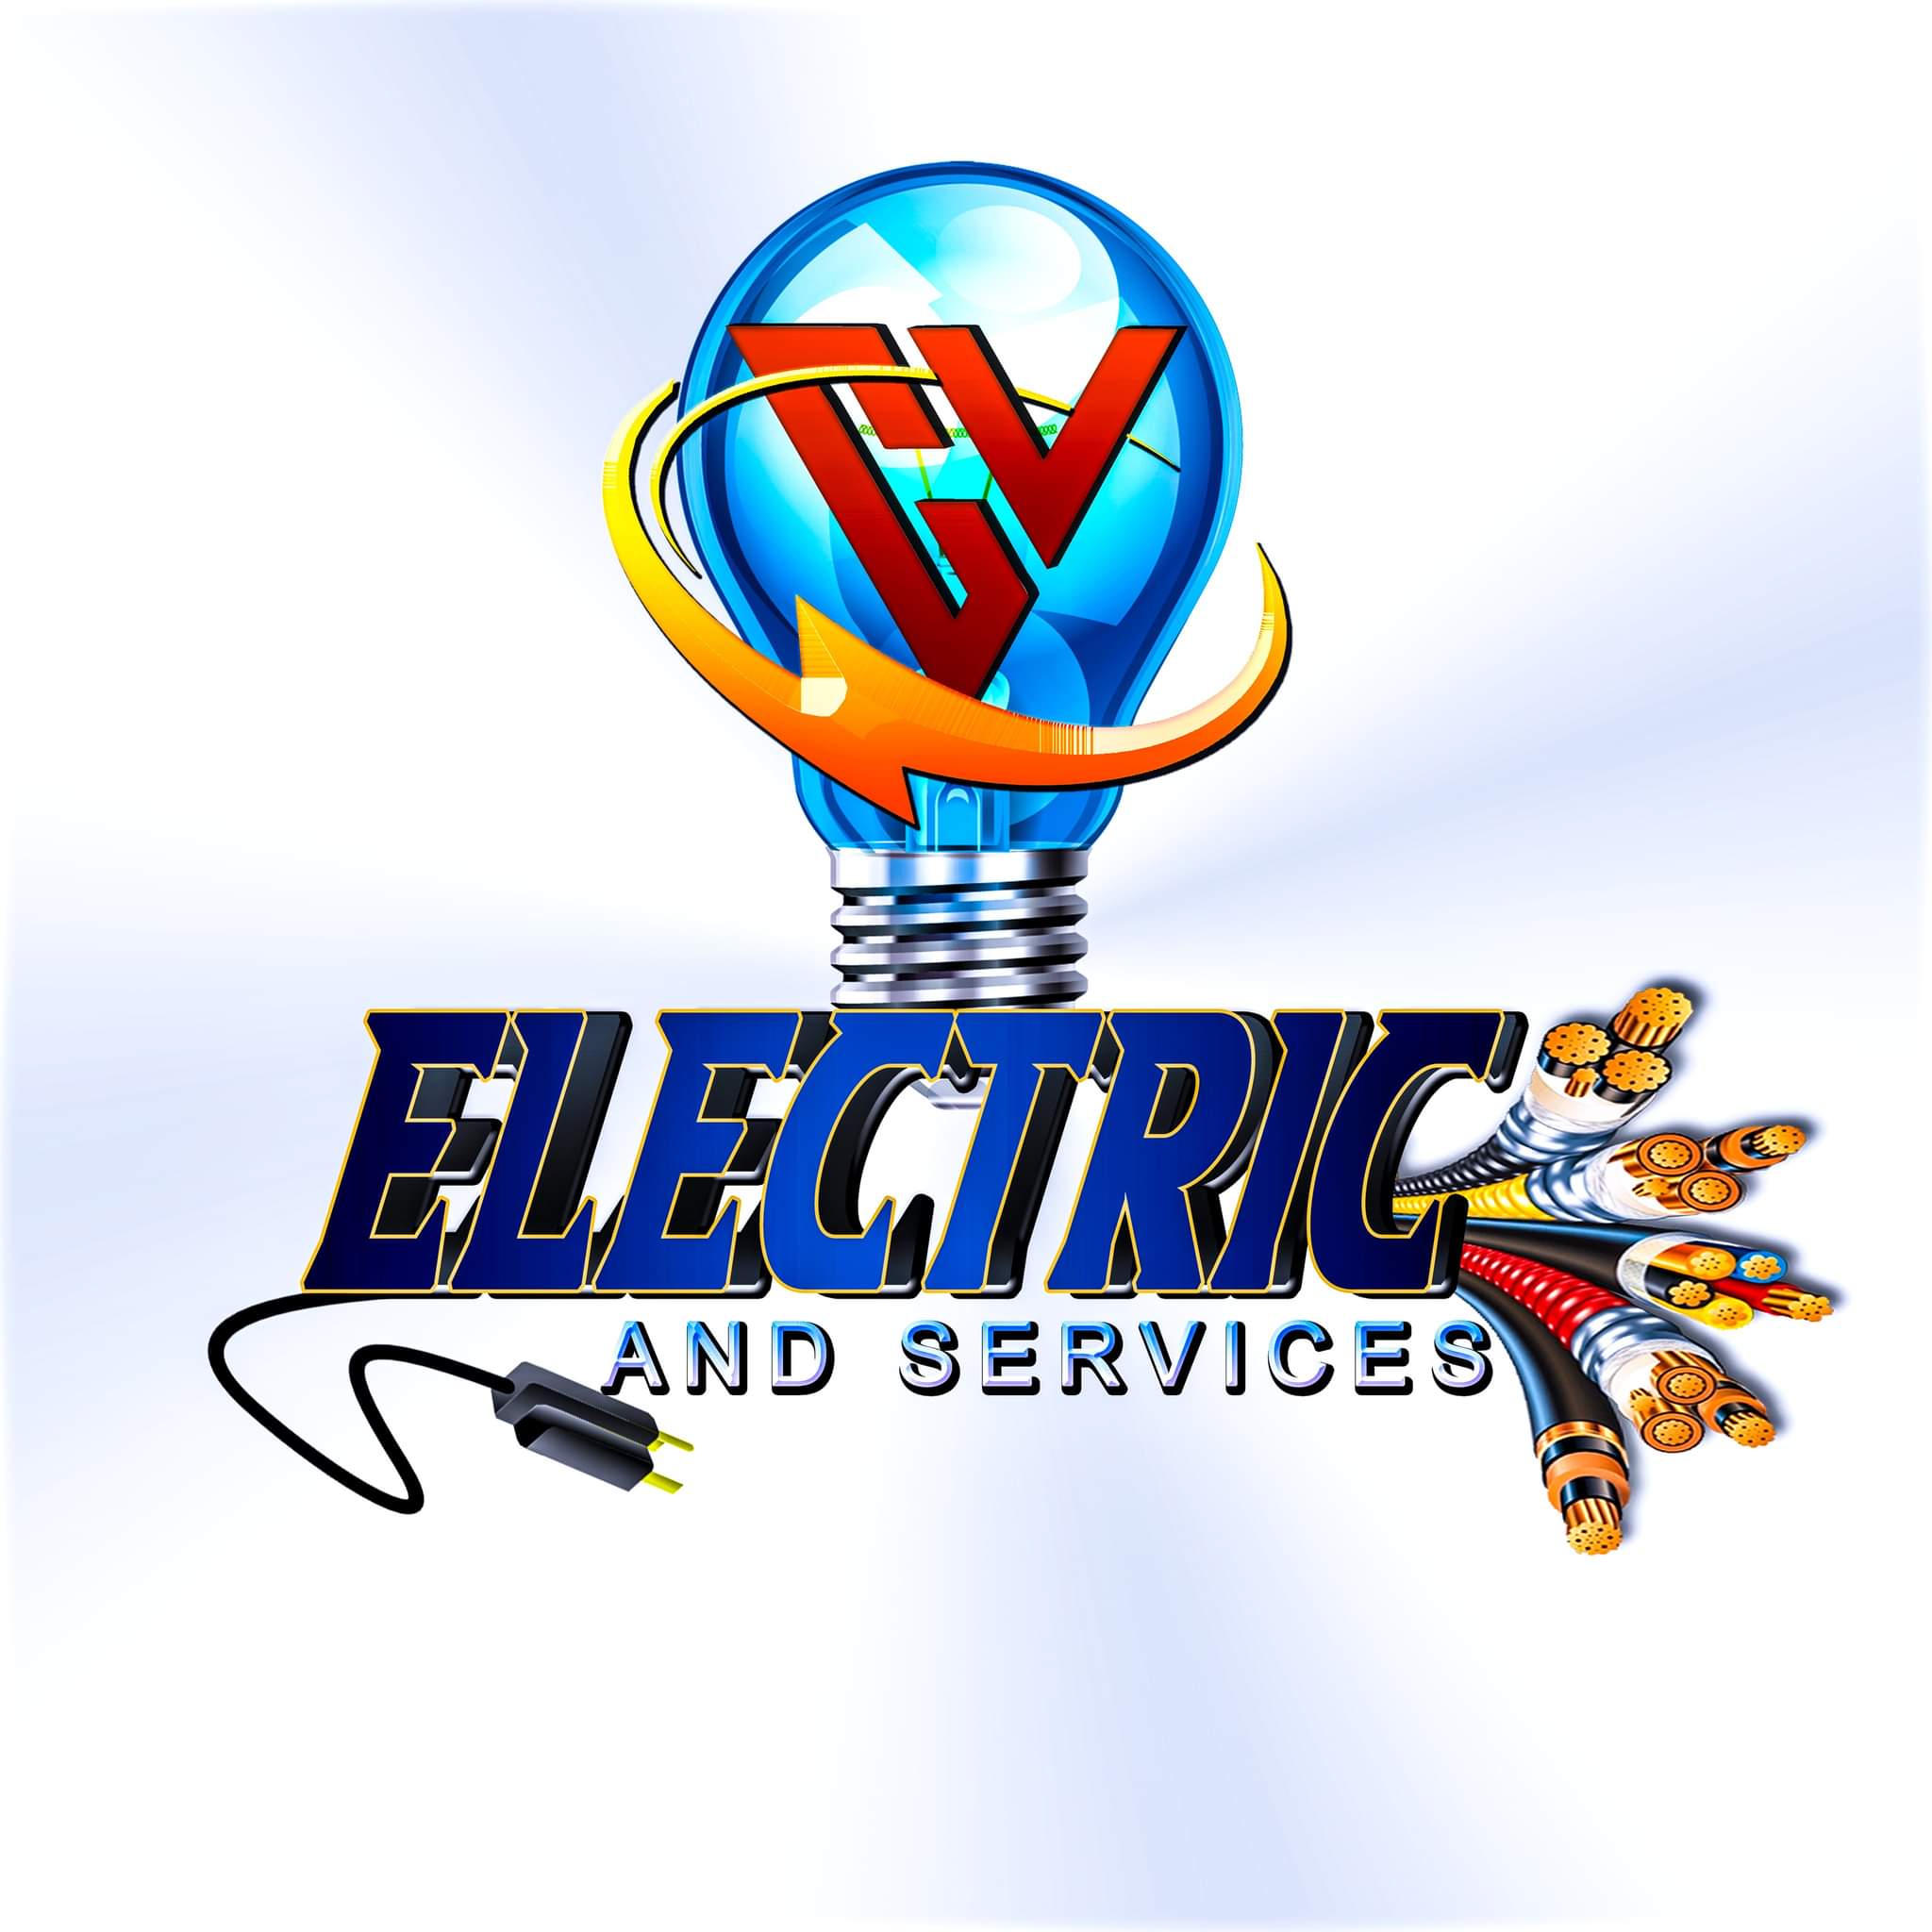 C.V. Electric & Services Logo